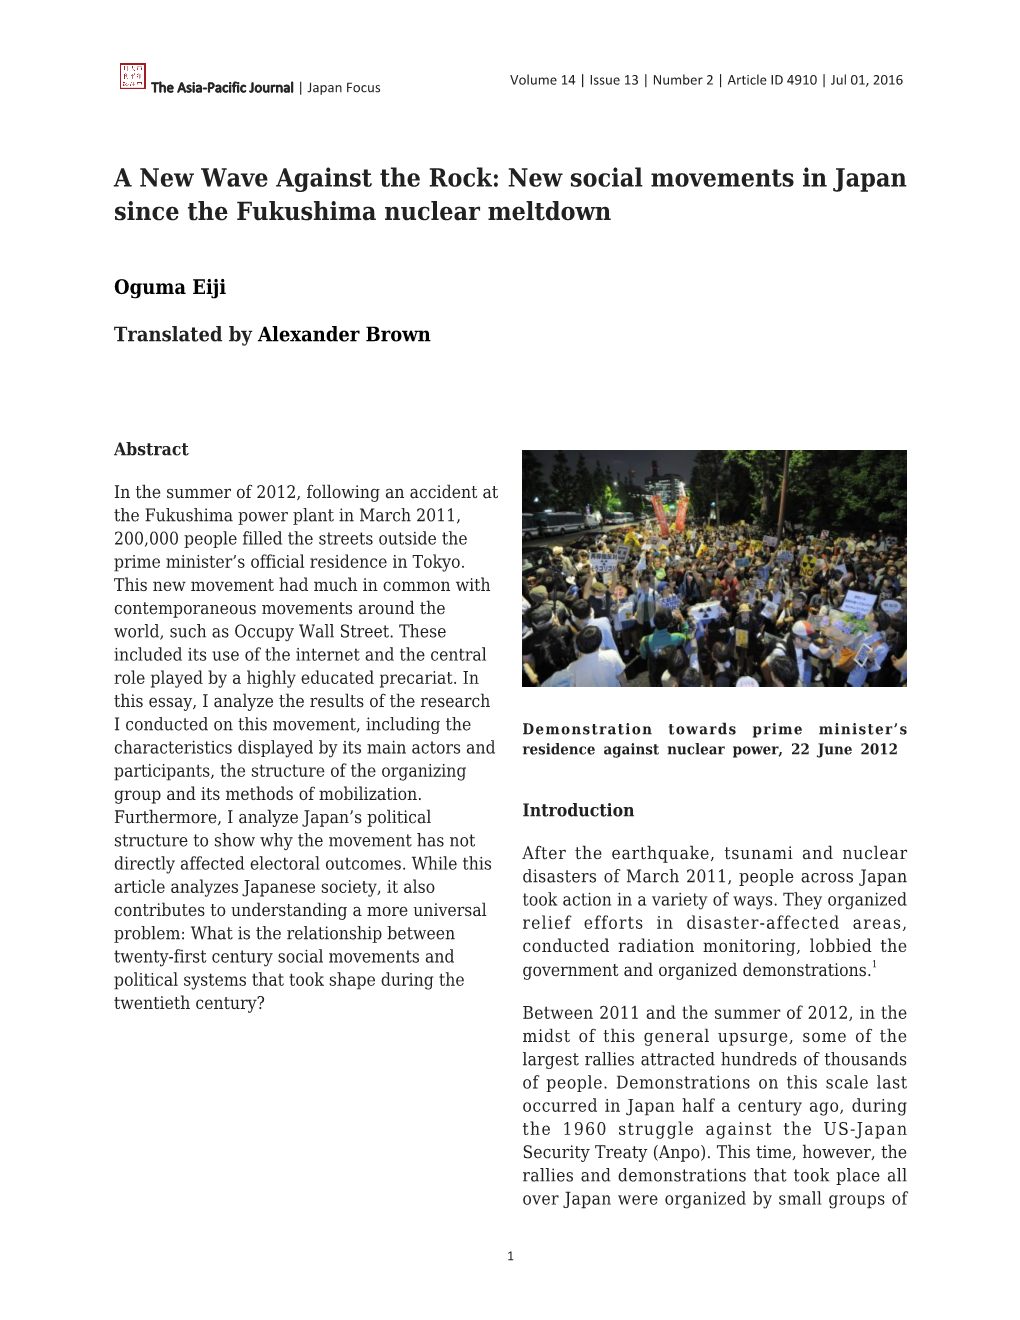 New Social Movements in Japan Since the Fukushima Nuclear Meltdown